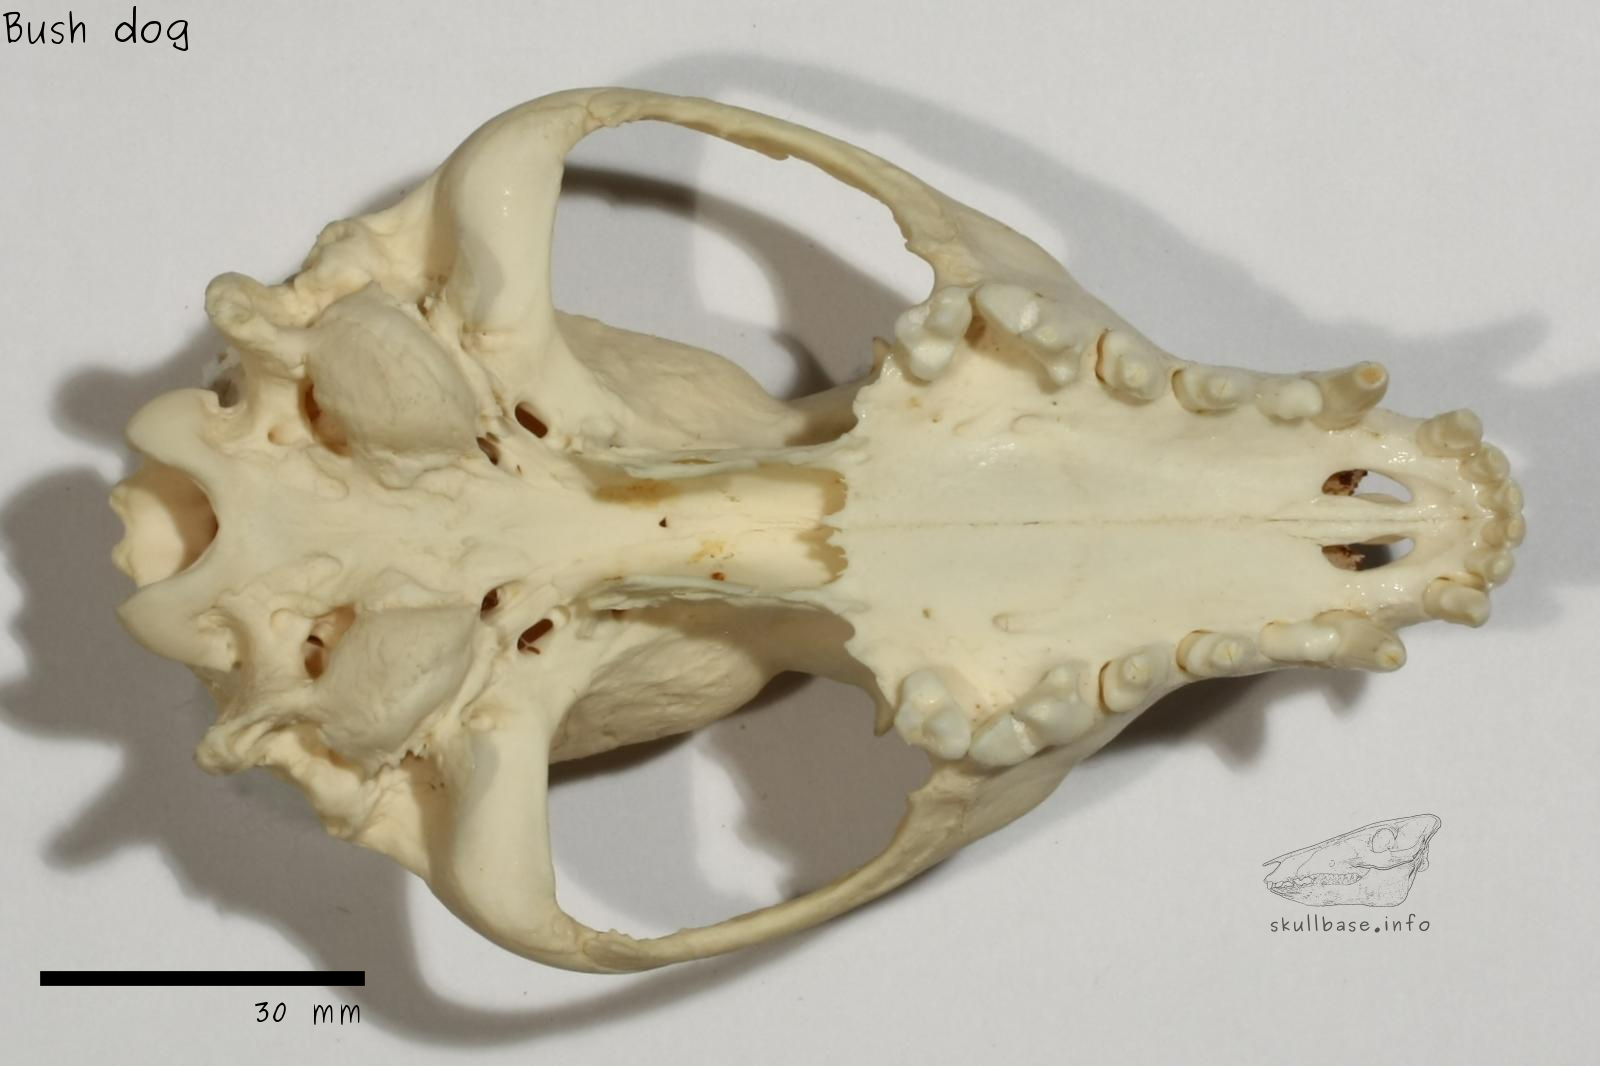 Bush dog (Speothos venaticus) skull ventral view